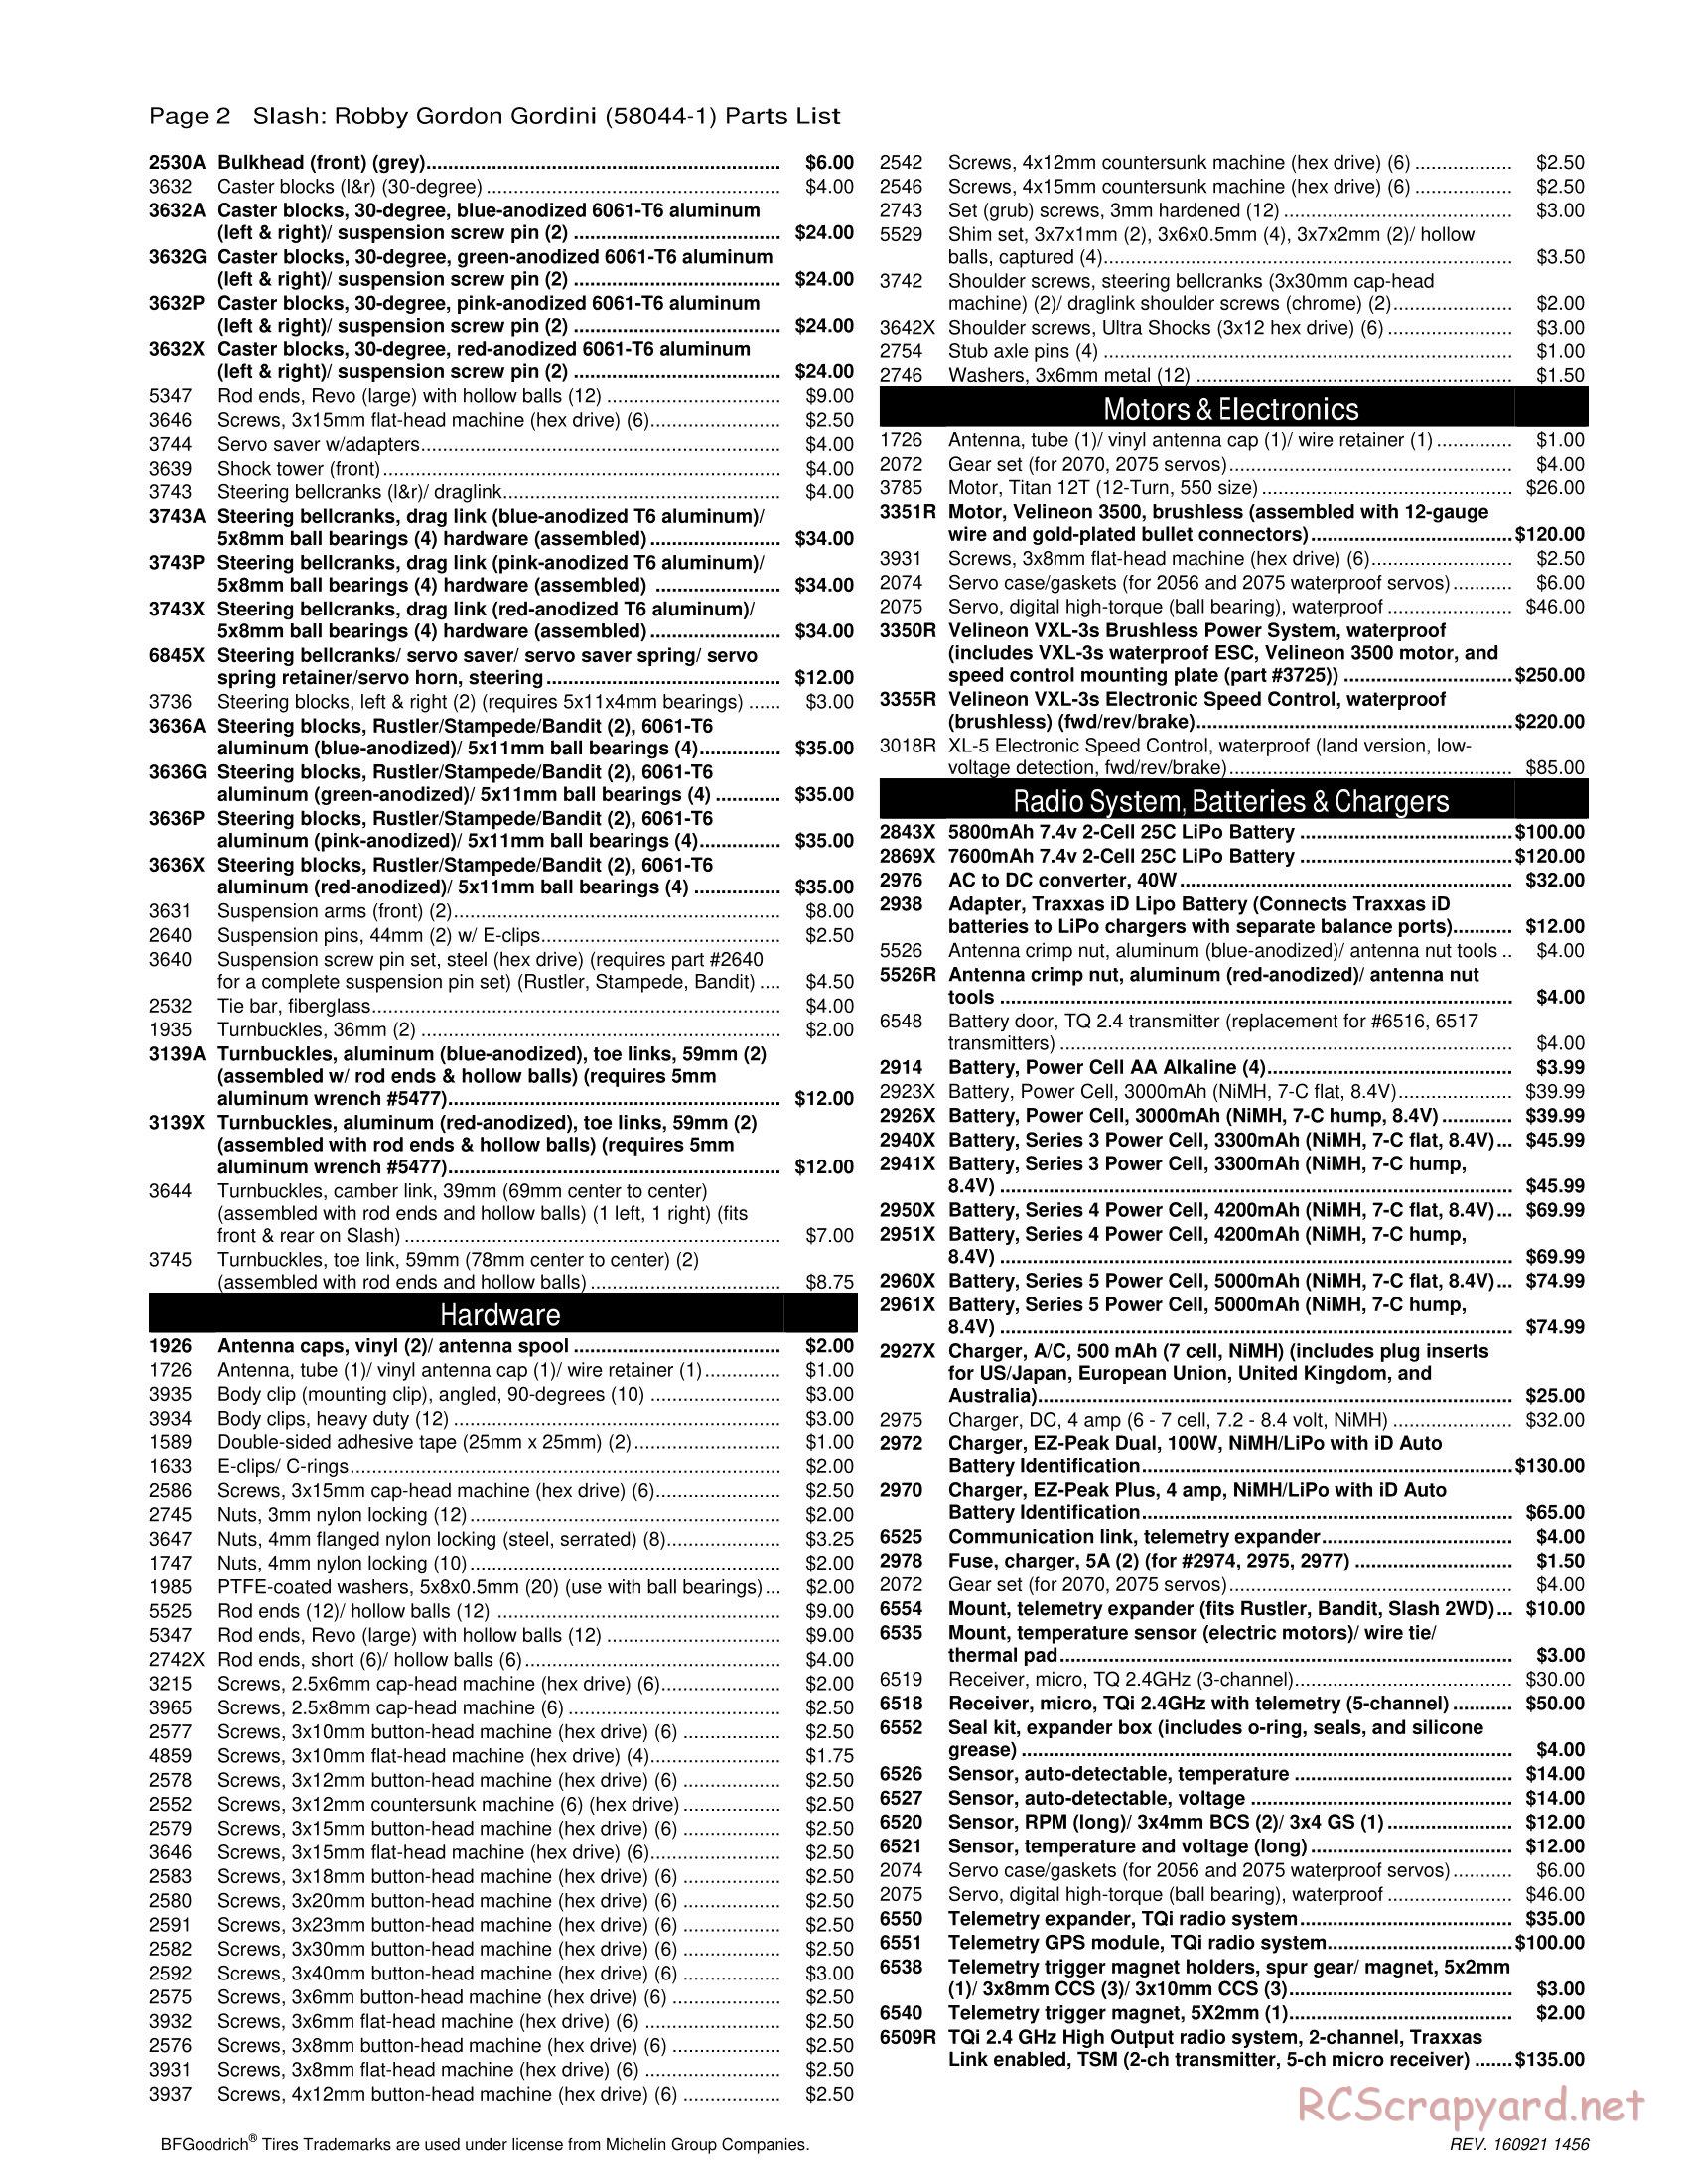 Traxxas - Slash 2WD Robby Gordon Dakar Ed (2014) - Parts List - Page 2